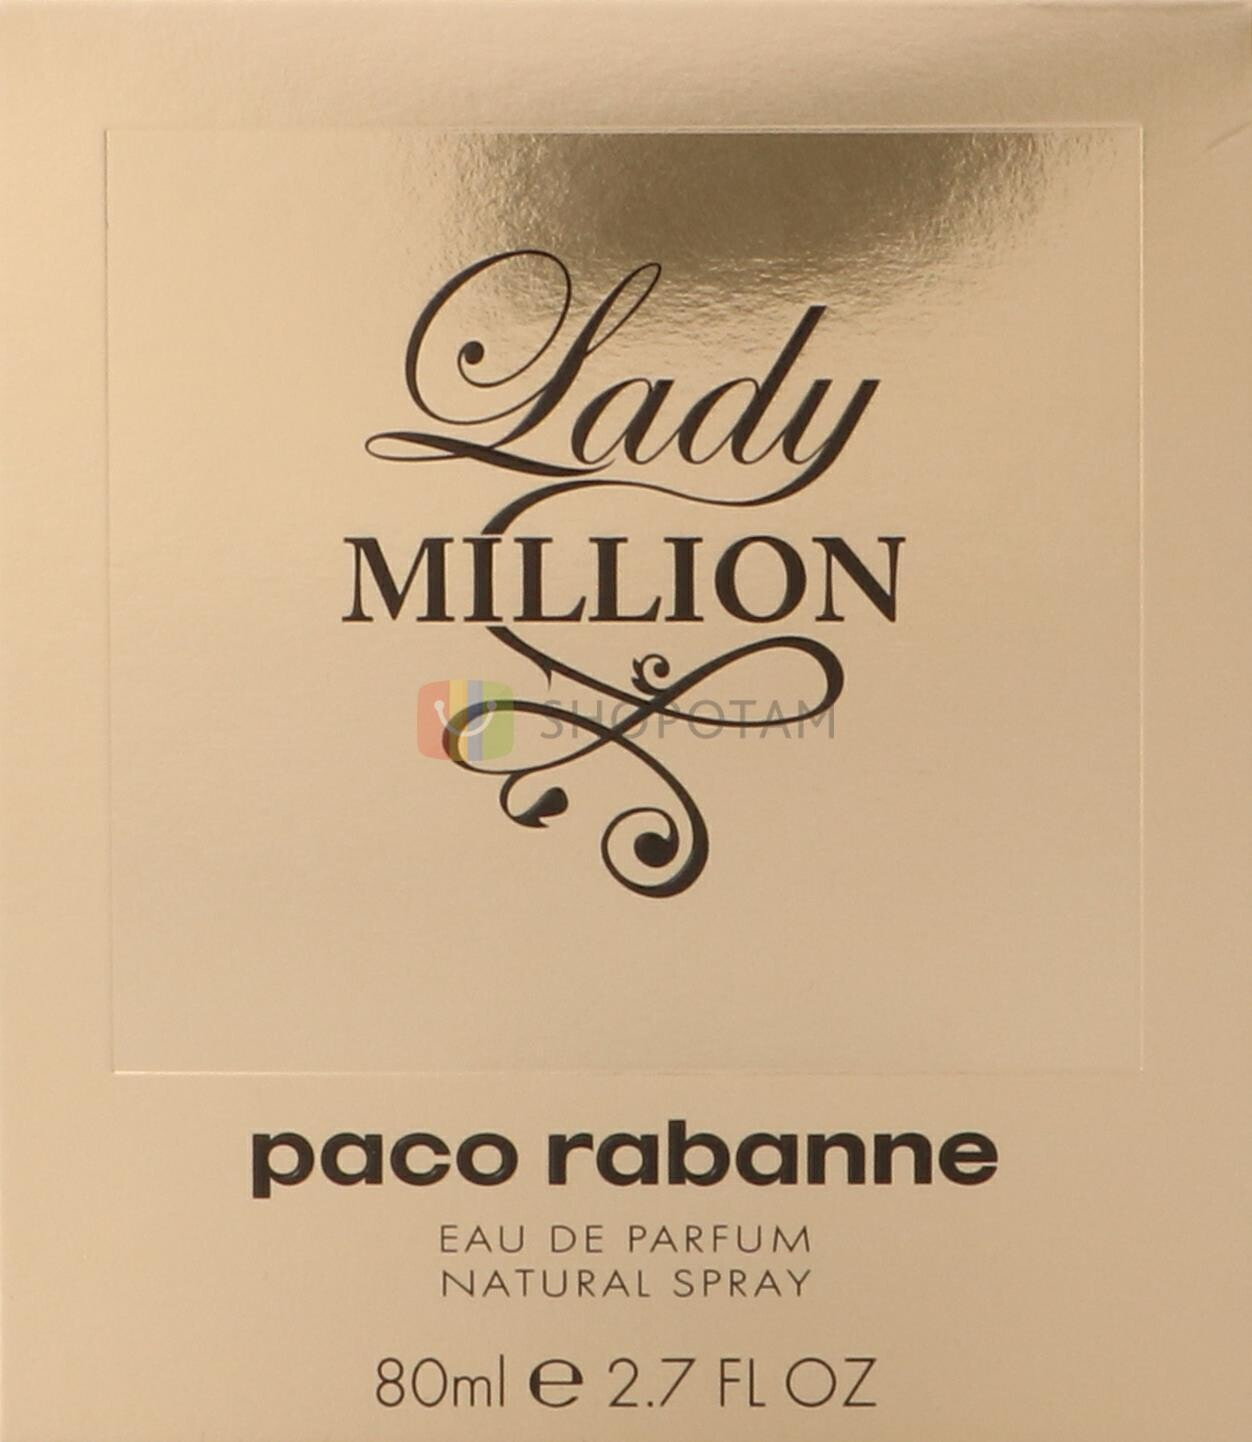 PACO RABANNE Lady Million